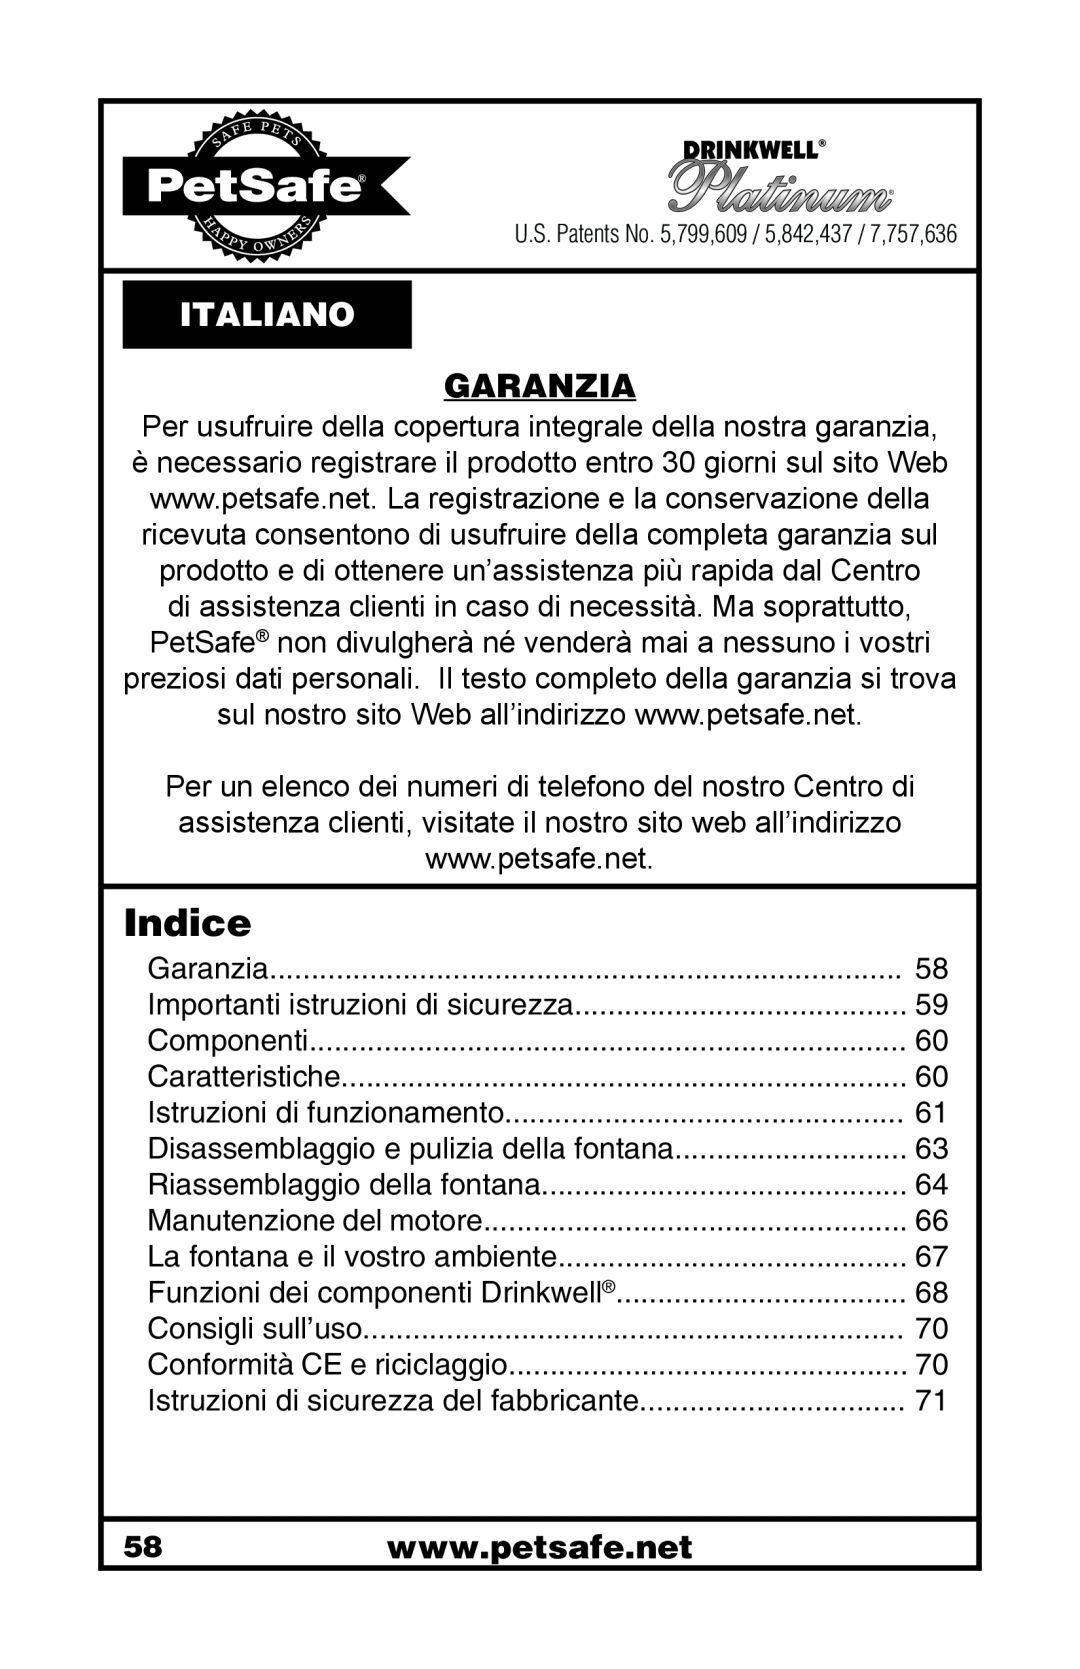 Petsafe 400-1255-19 manuel dutilisation Indice, Italiano, Garanzia 